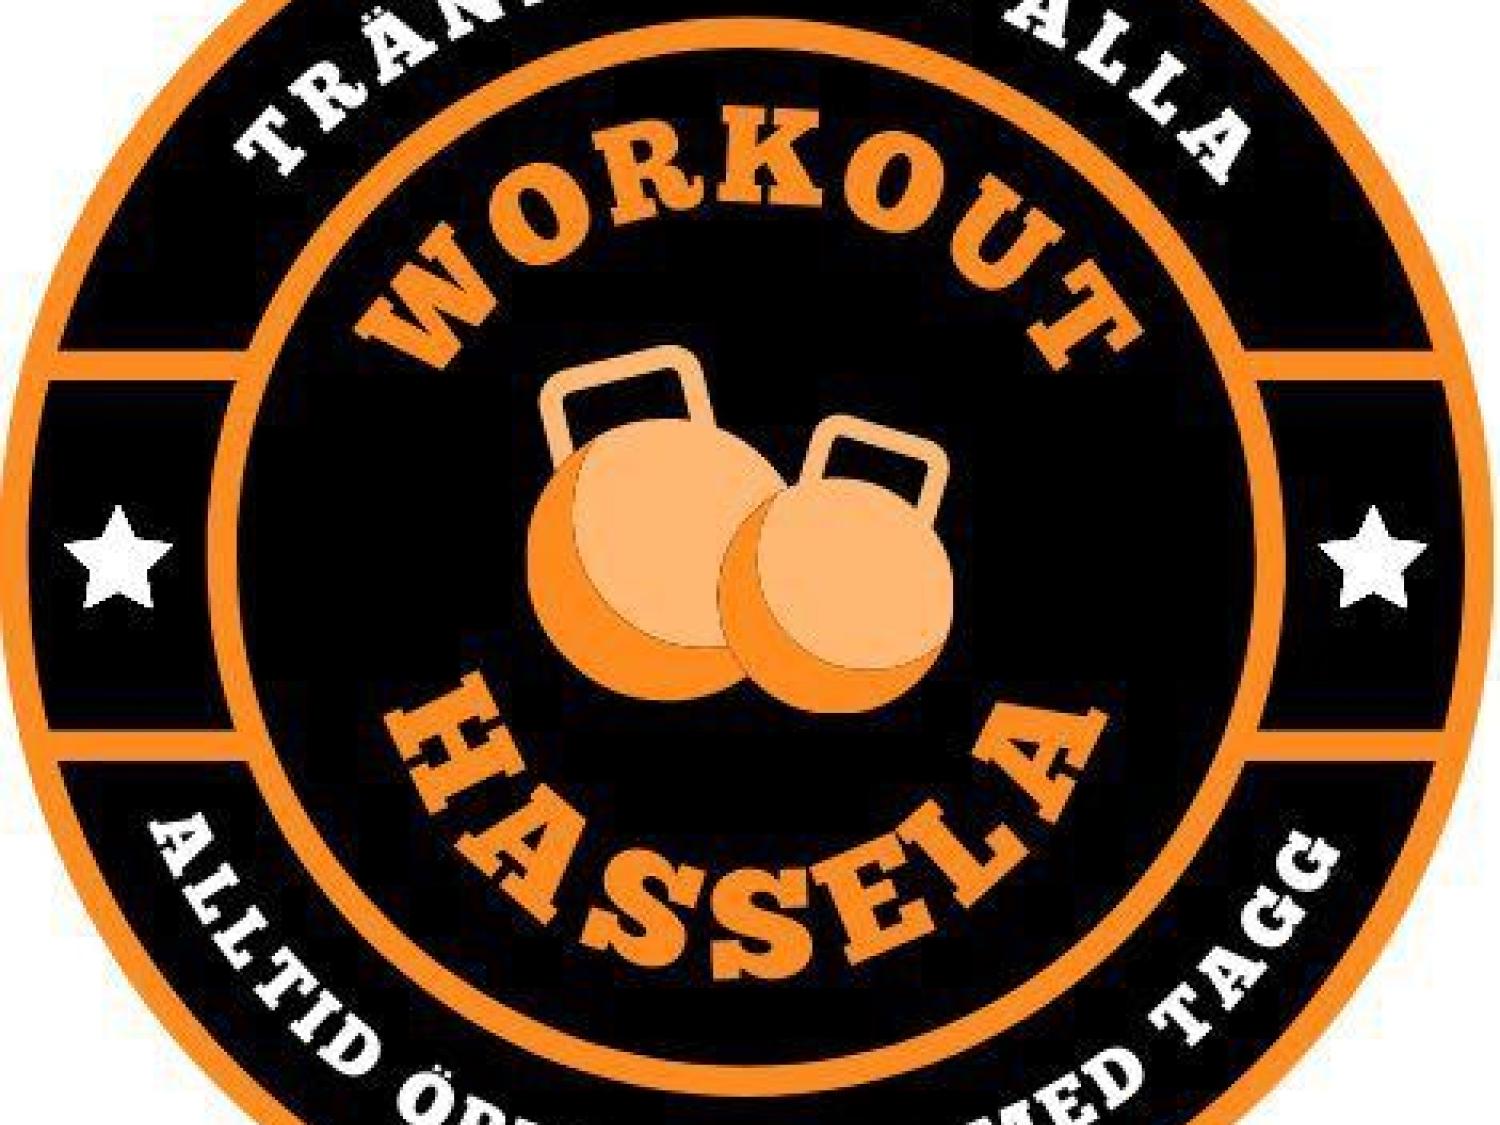 Workout Hassela